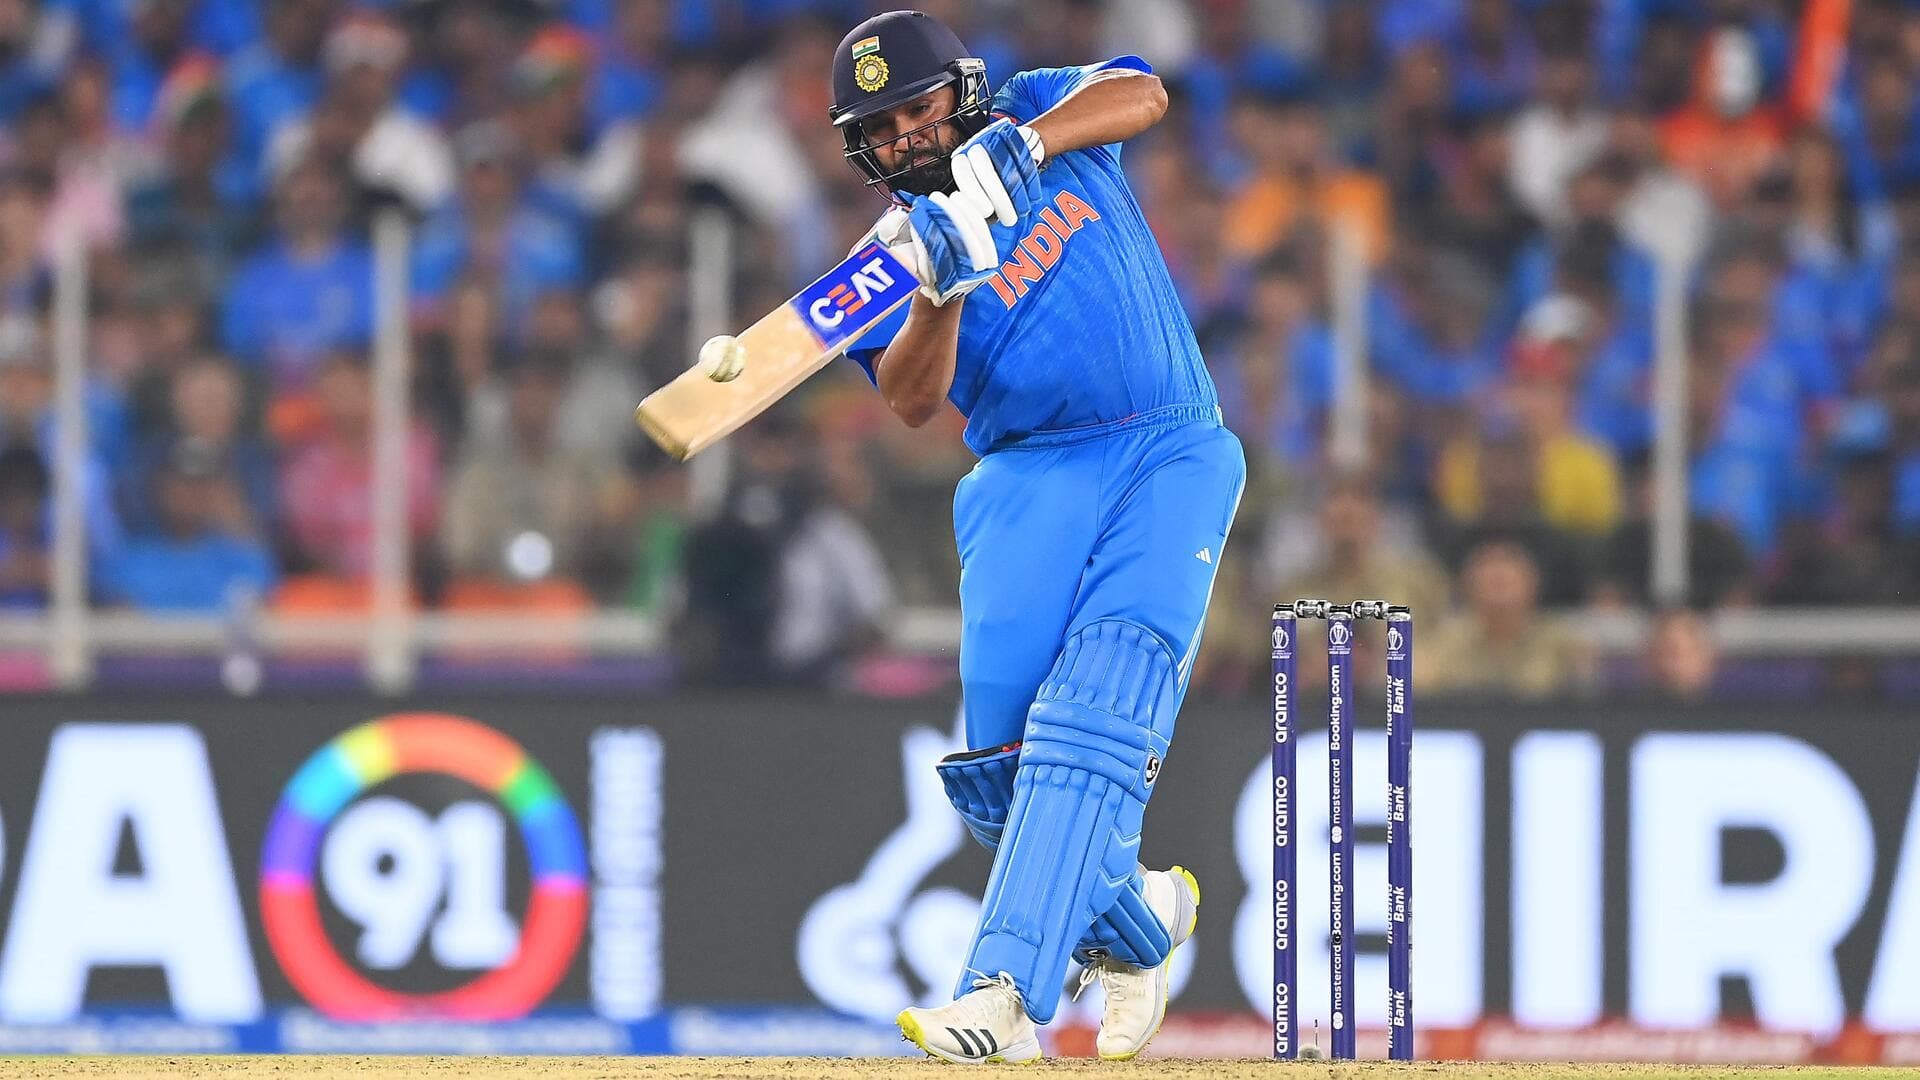 Rohit Sharma surpasses 6,000 ODI runs in Asia: Key stats